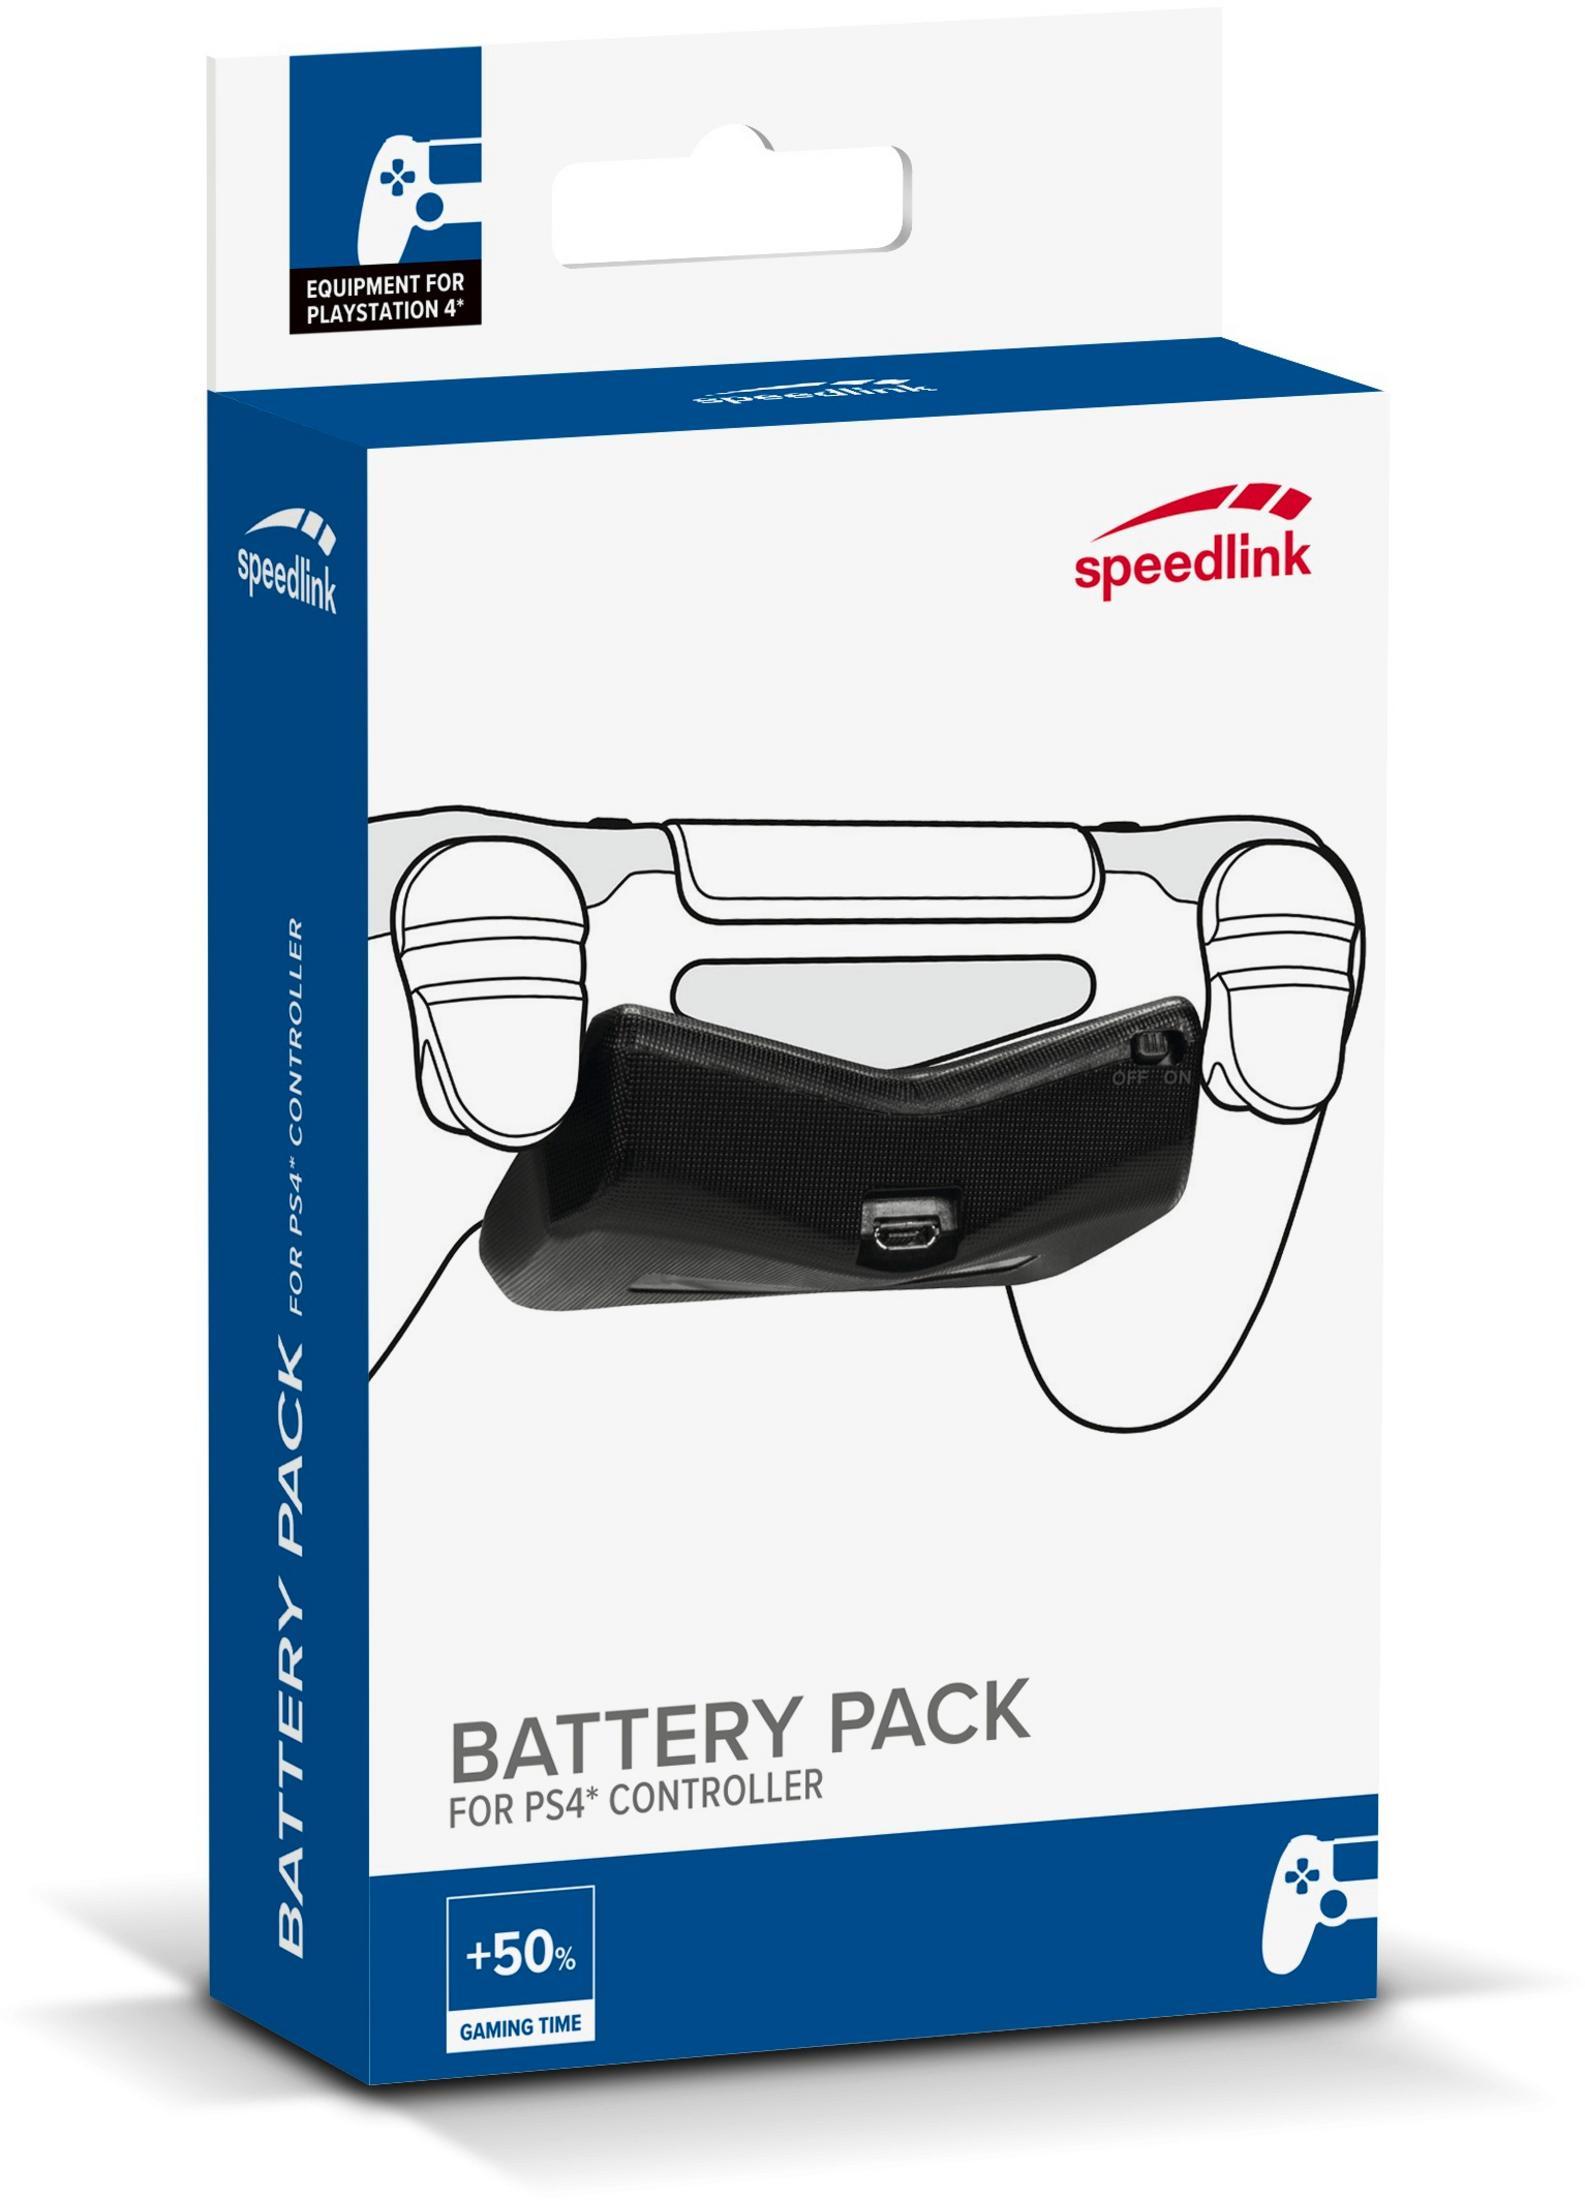 PACK CONTROLLER, SPEEDLINK Schwarz SL-450003-BK BATTERY Batterie-Pack, PS4